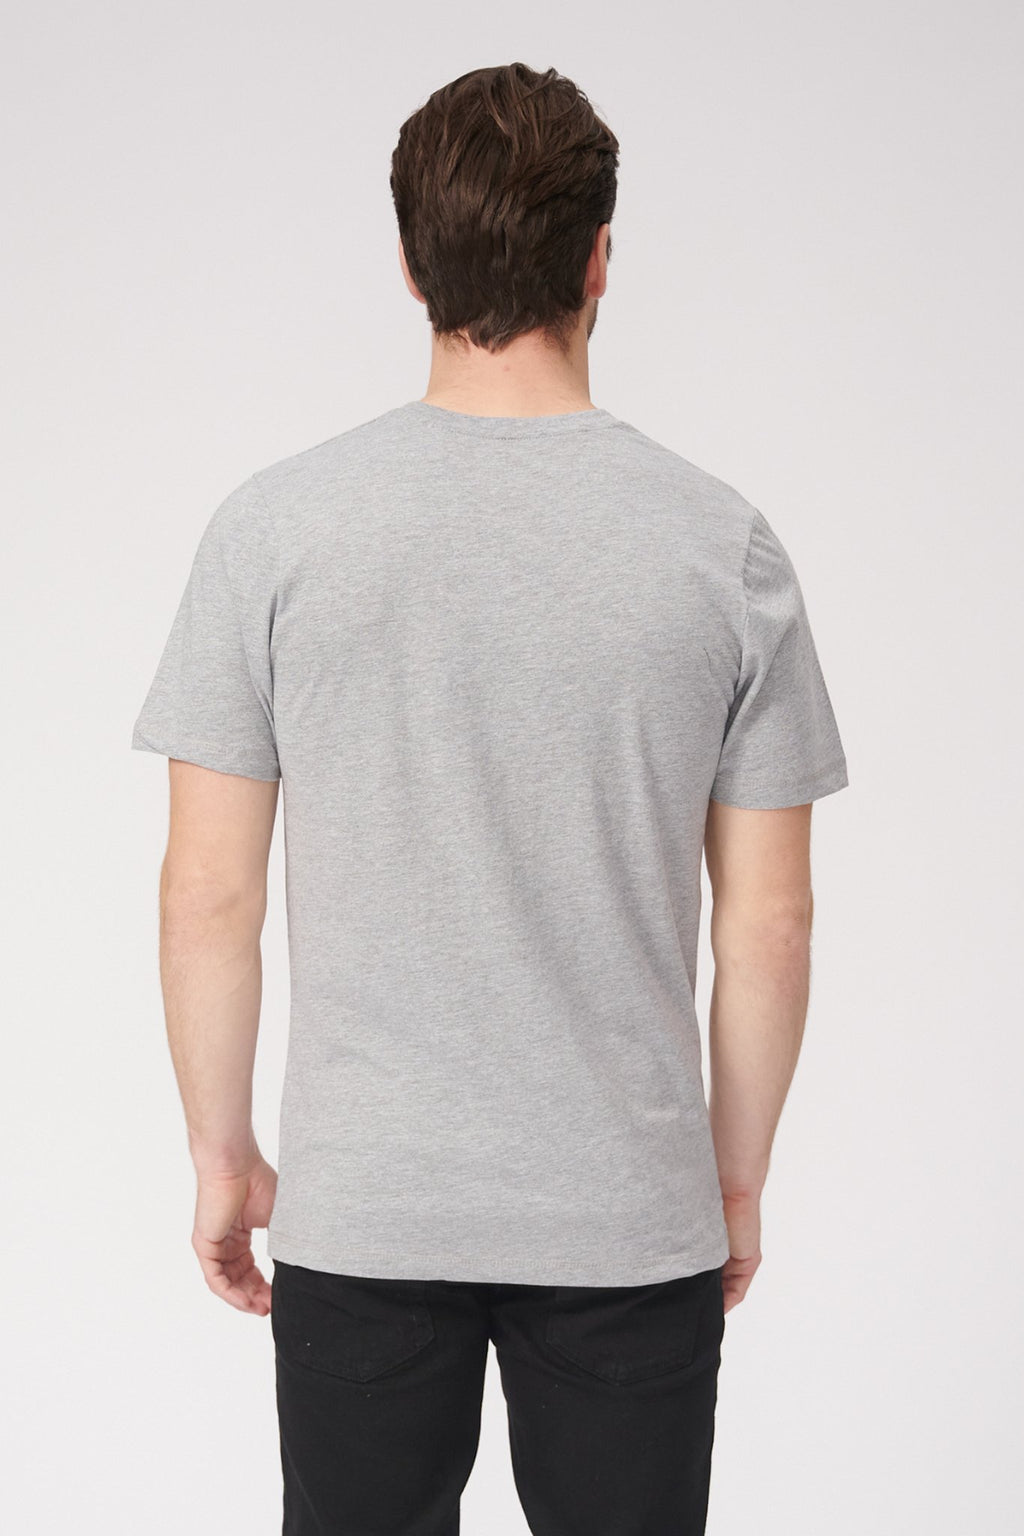 Basic Vneck t-shirt - Oxford Gray